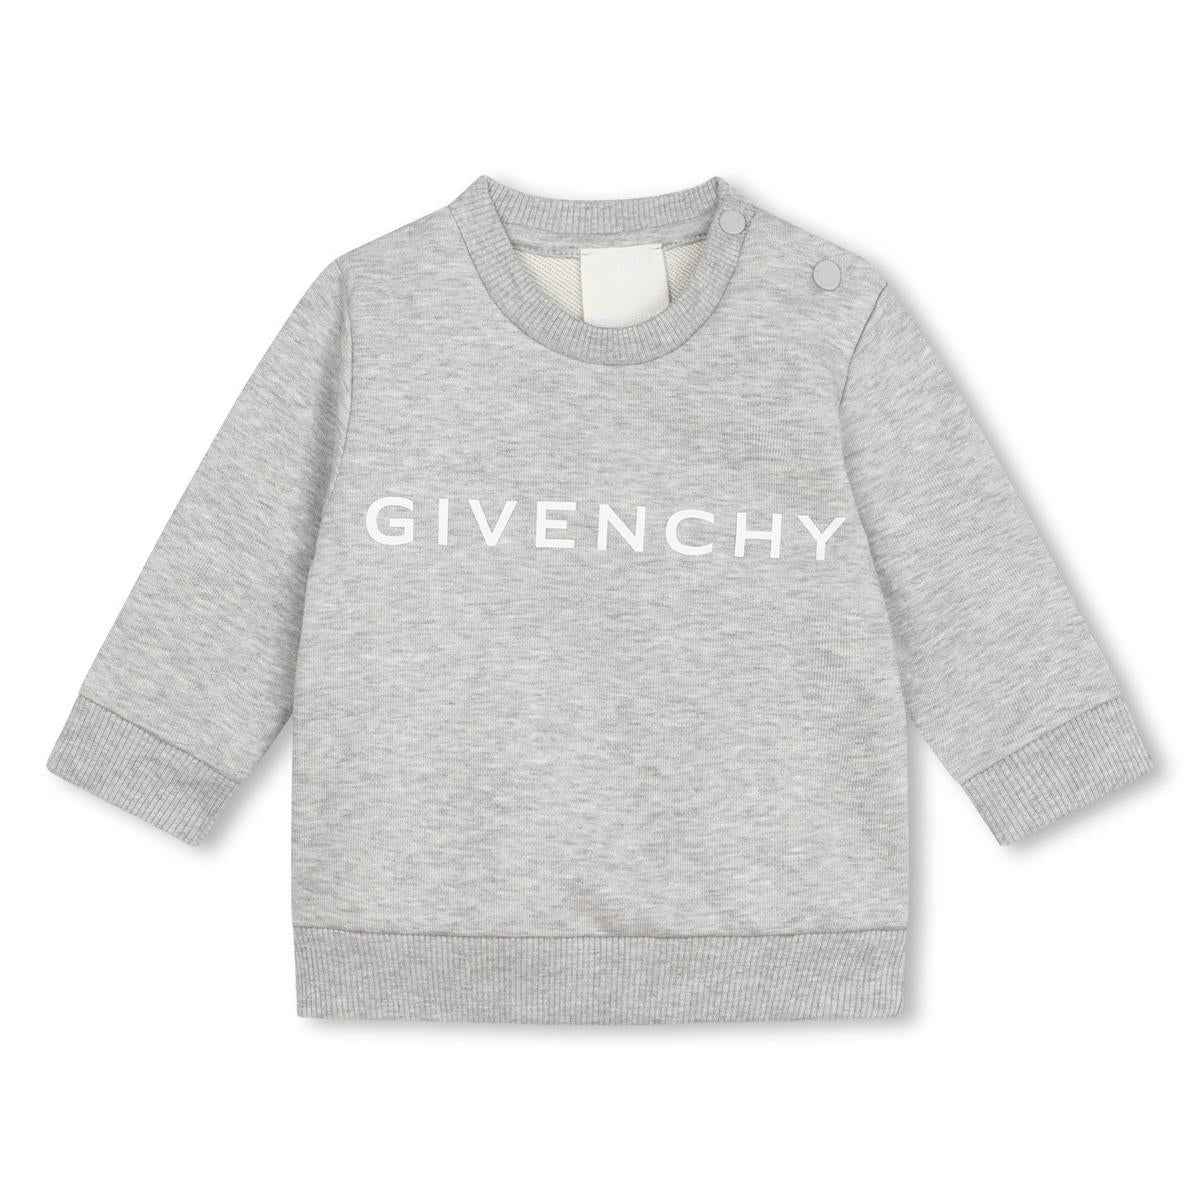 Baby Boys Grey Logo Sweatshirt